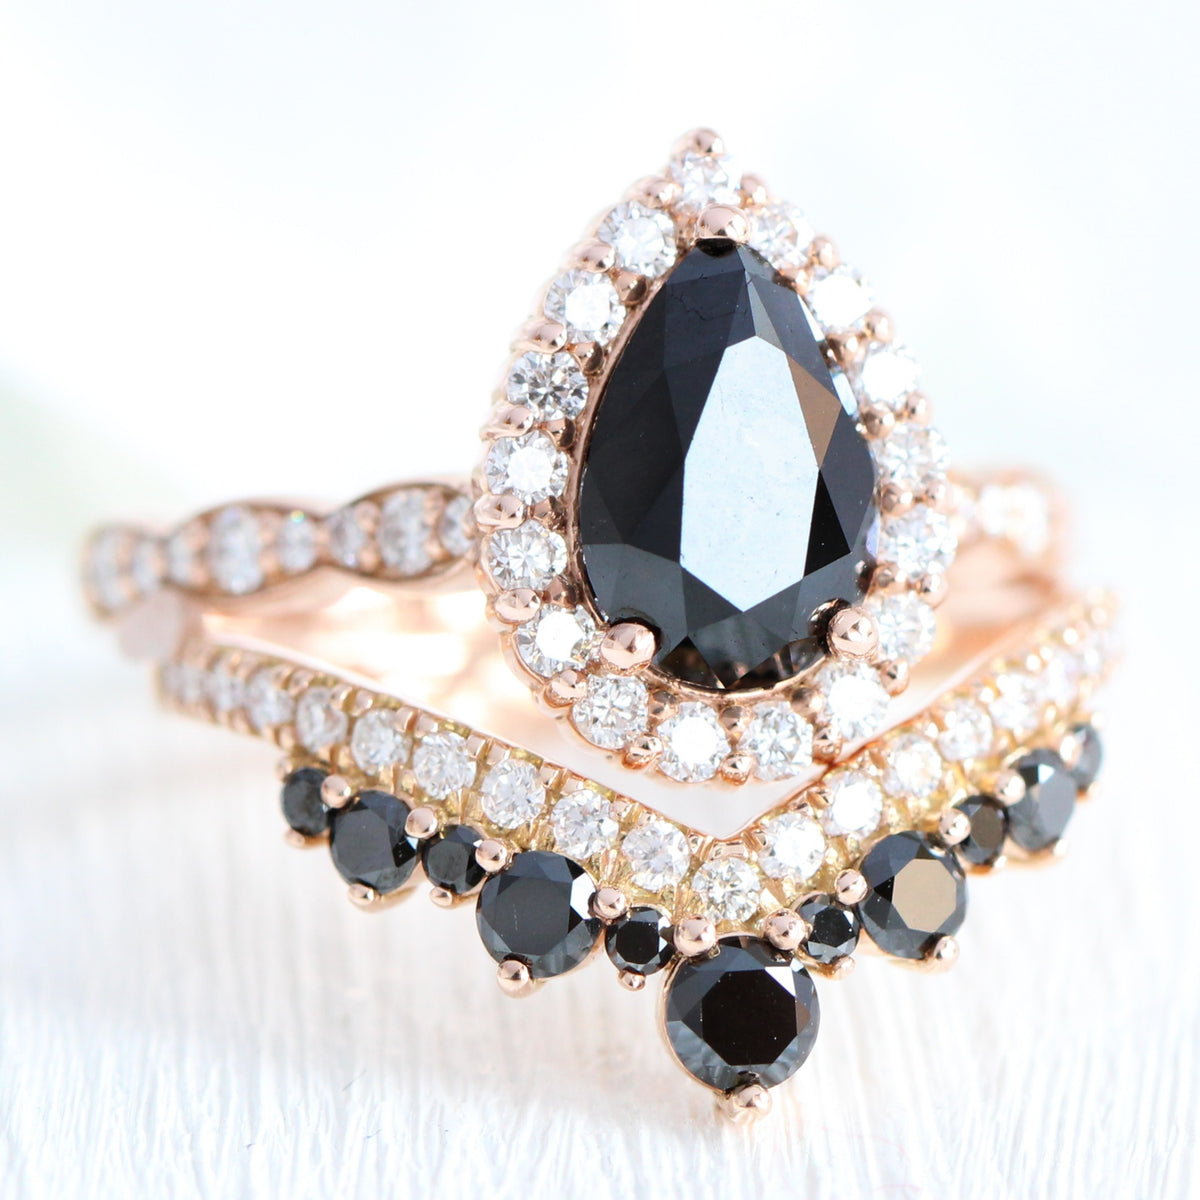 Pear black diamond engagement ring rose gold large tiara diamond wedding band bridal ring set la more design jewelry